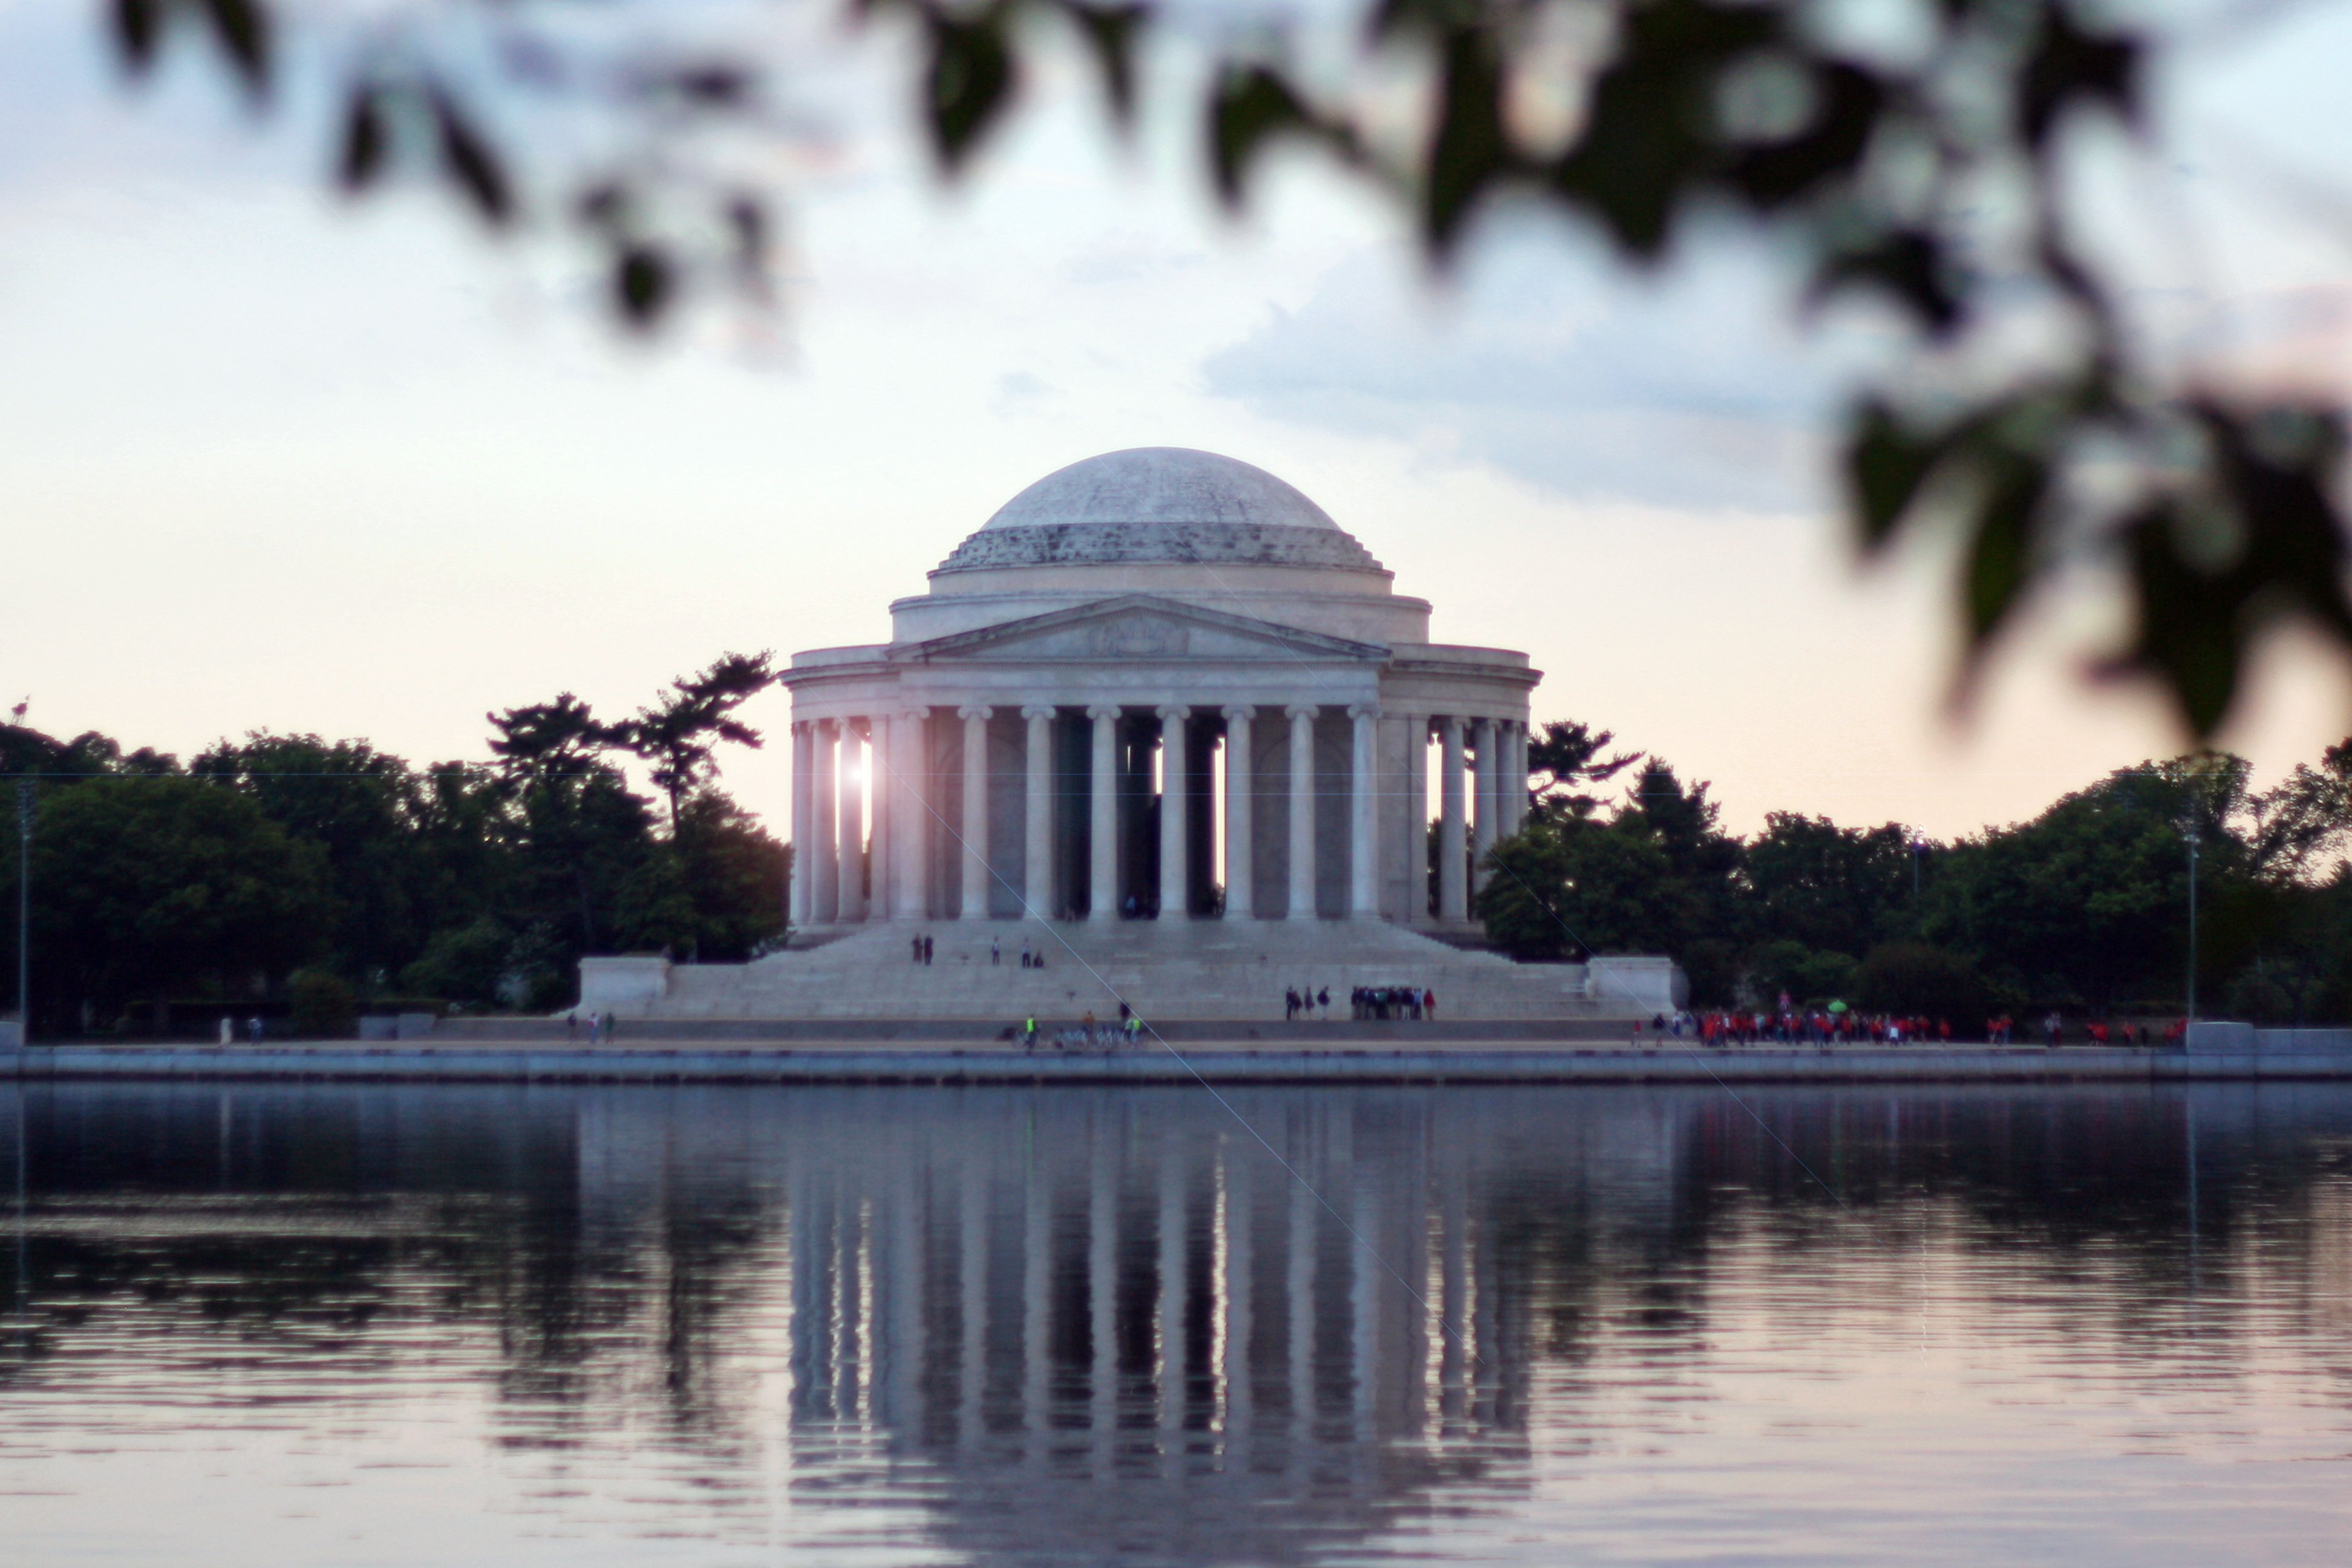 Jefferson Memorial | Less Than Average Height